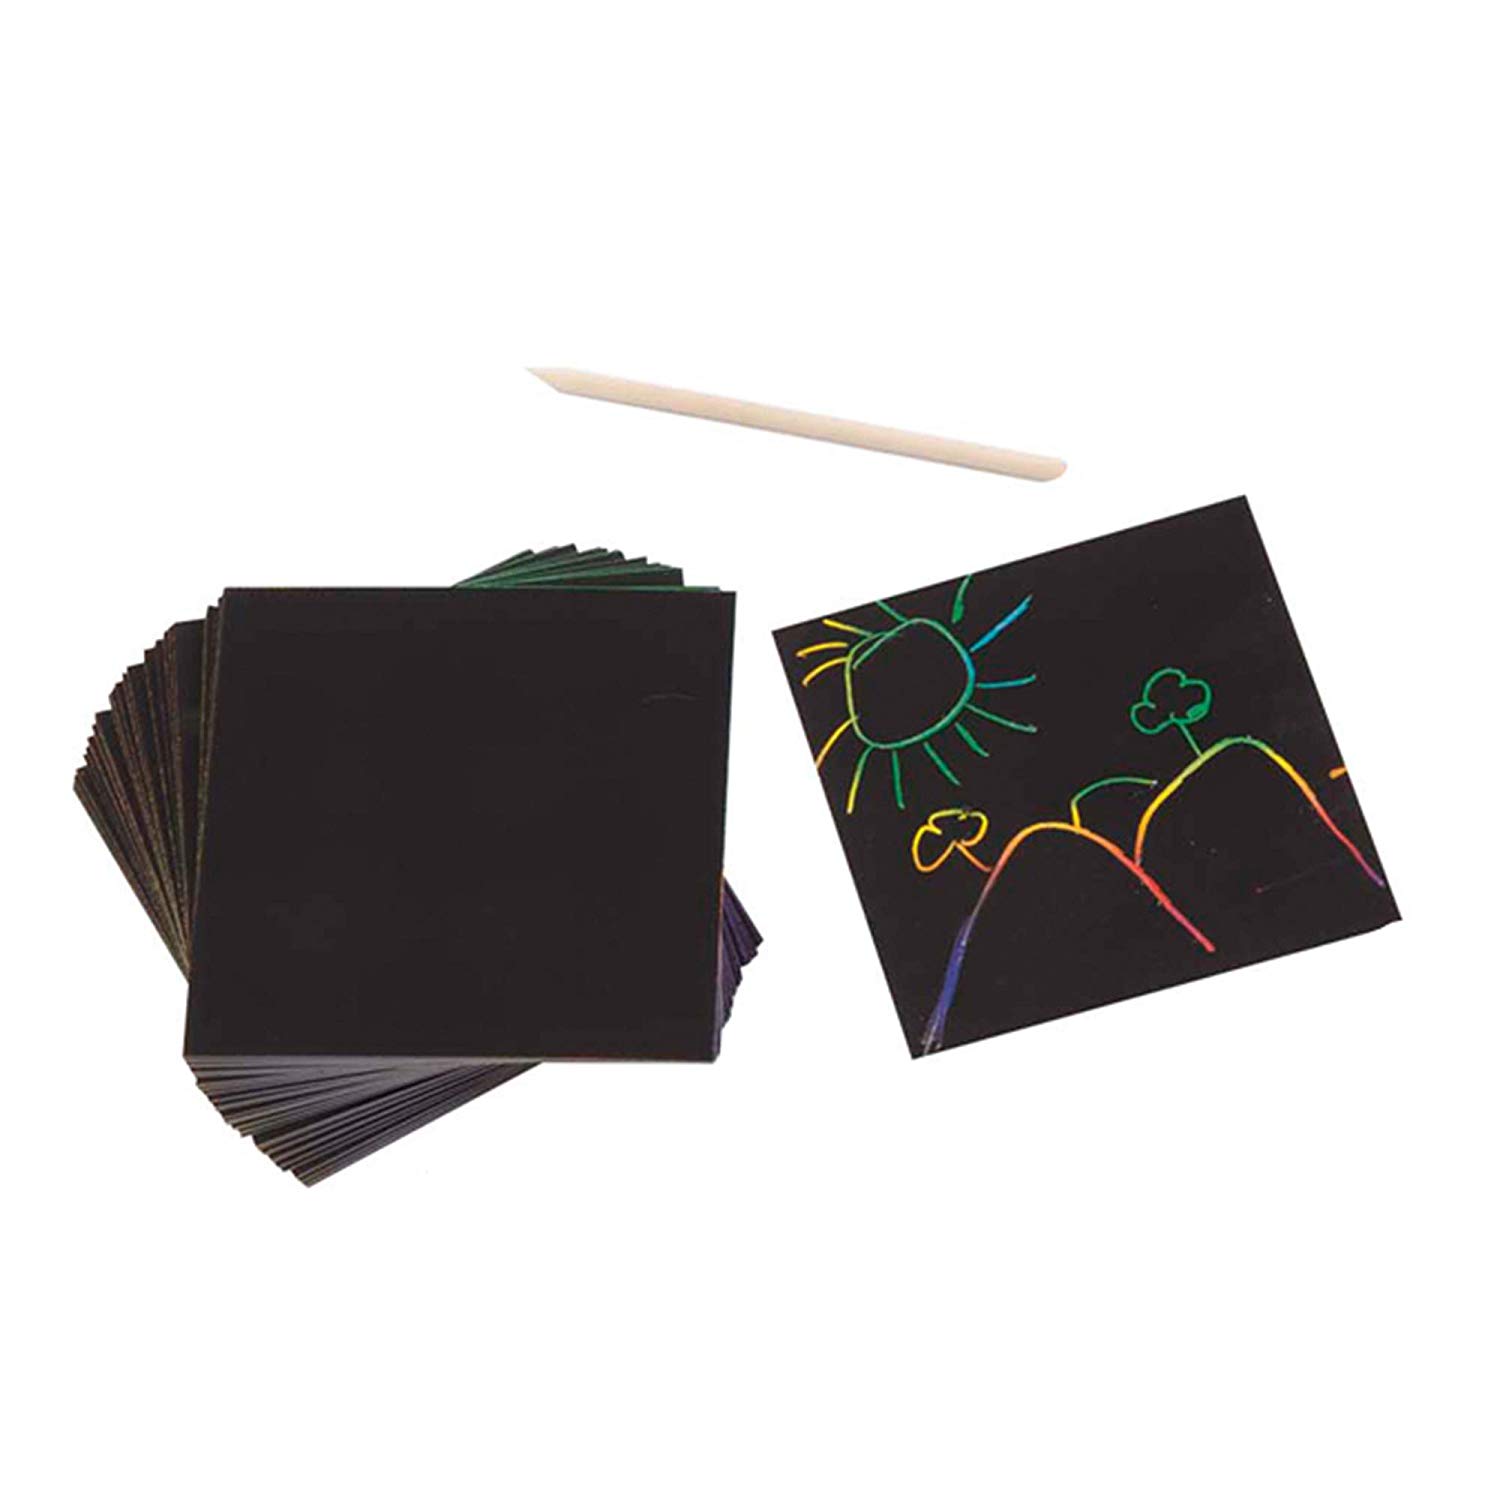 melissa & doug scratch art box of rainbow mini notes